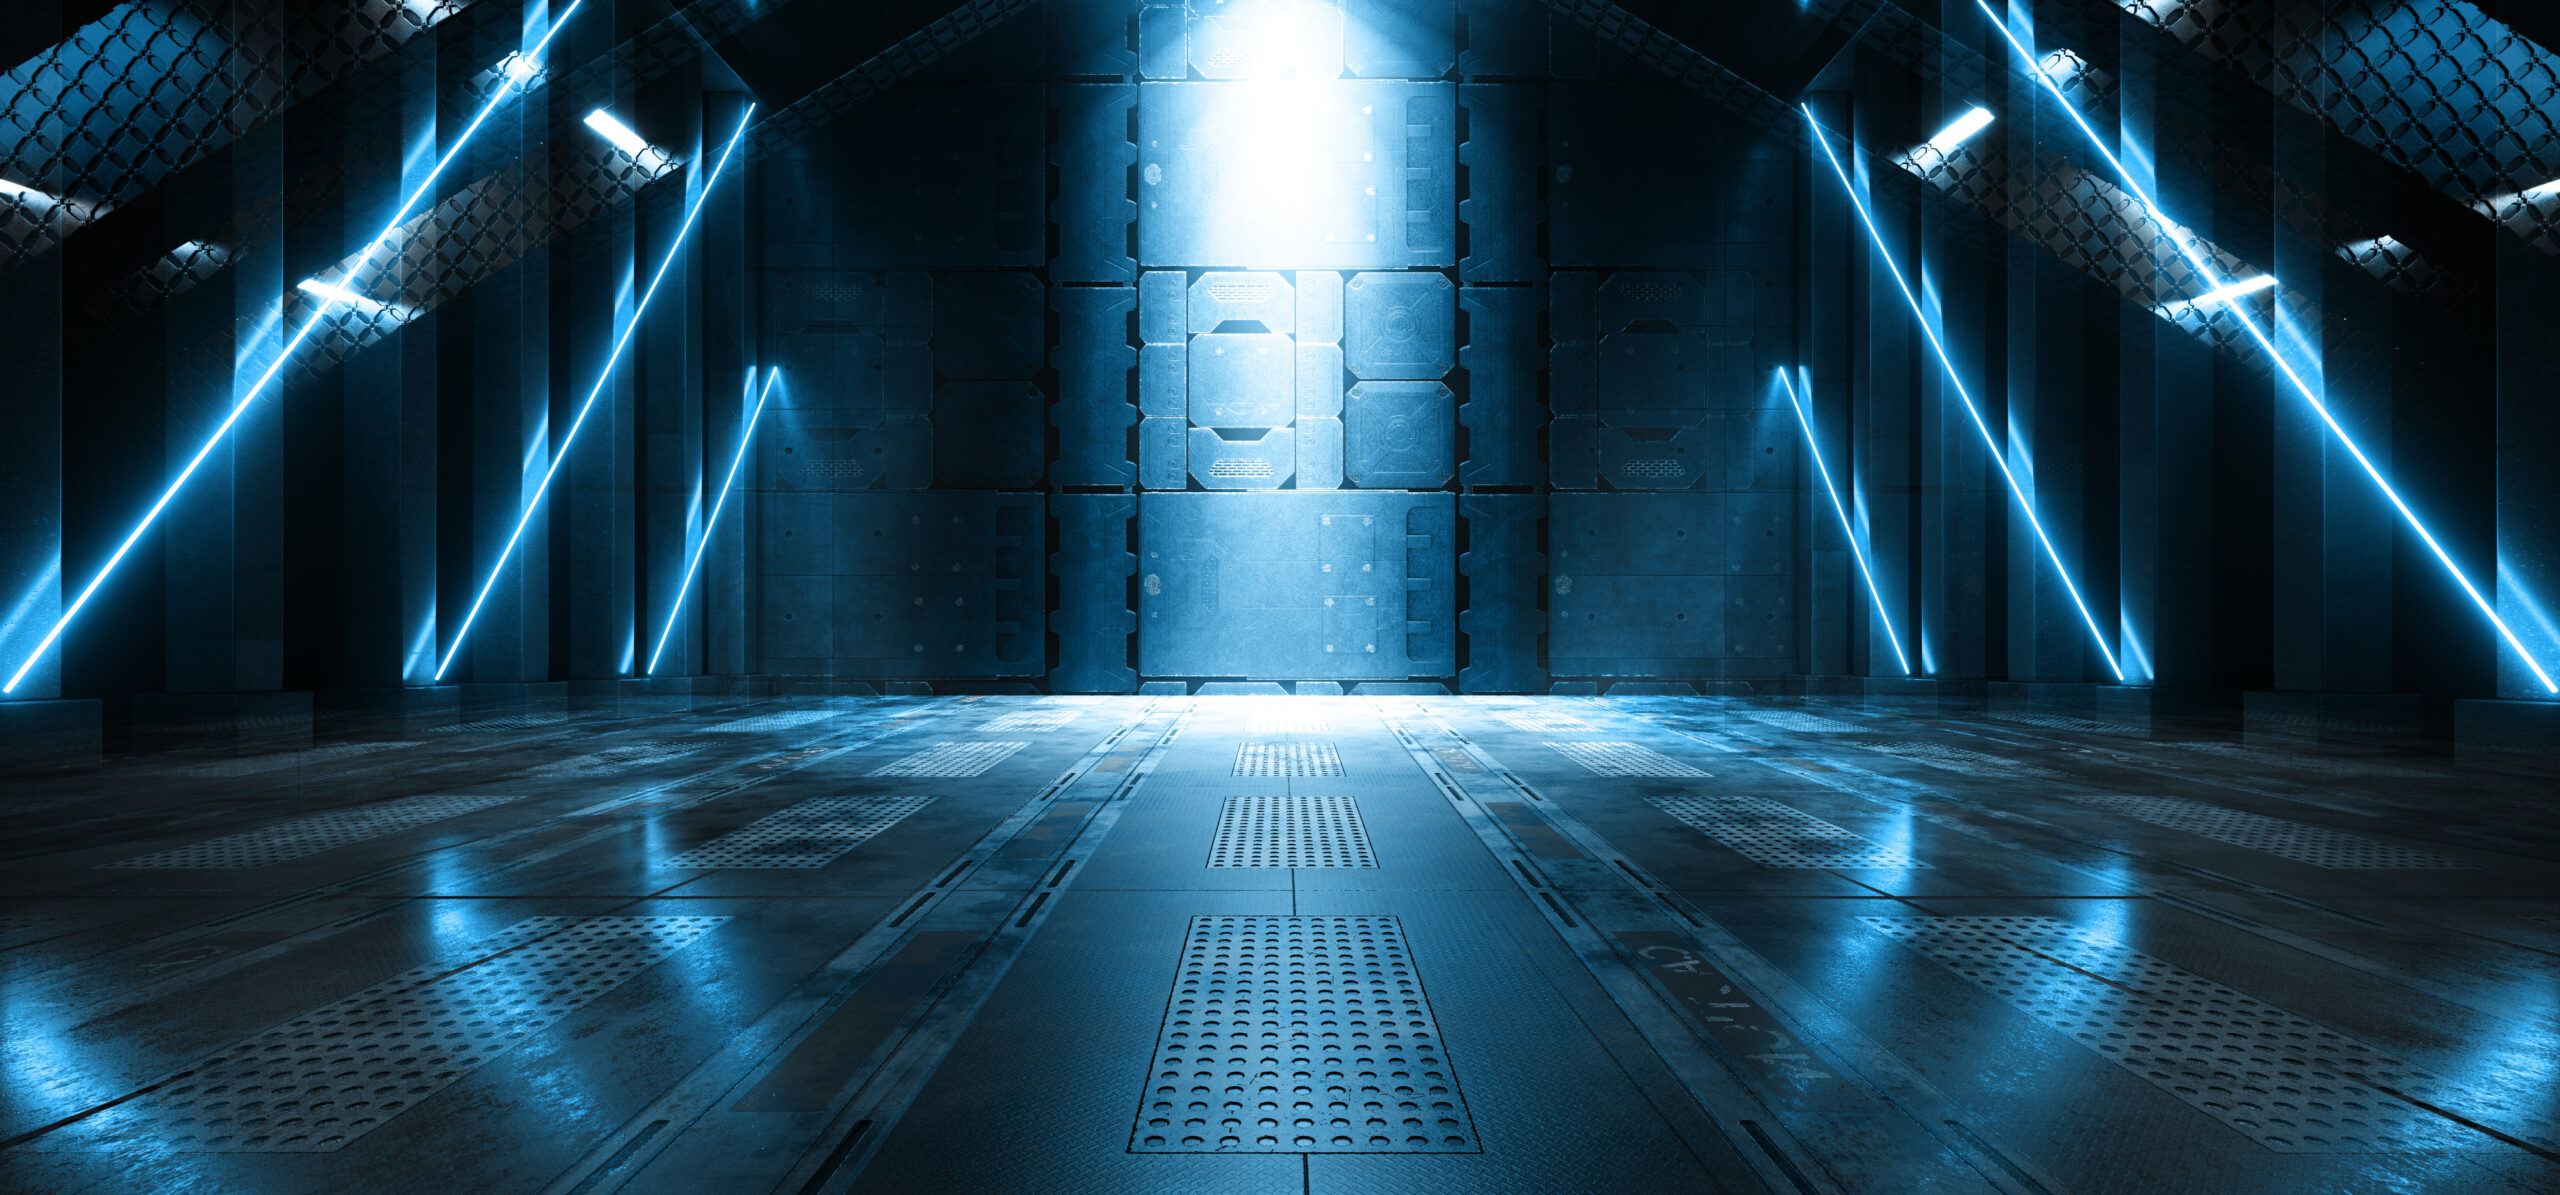 Sci Fi Futuristic Spaceship Warehouse Alien Tunnel Corridor Hangar Bunker Shelter Glossy Metal Panels Cyber Blue Neon Glowing Lights 3D Rendering Illustration